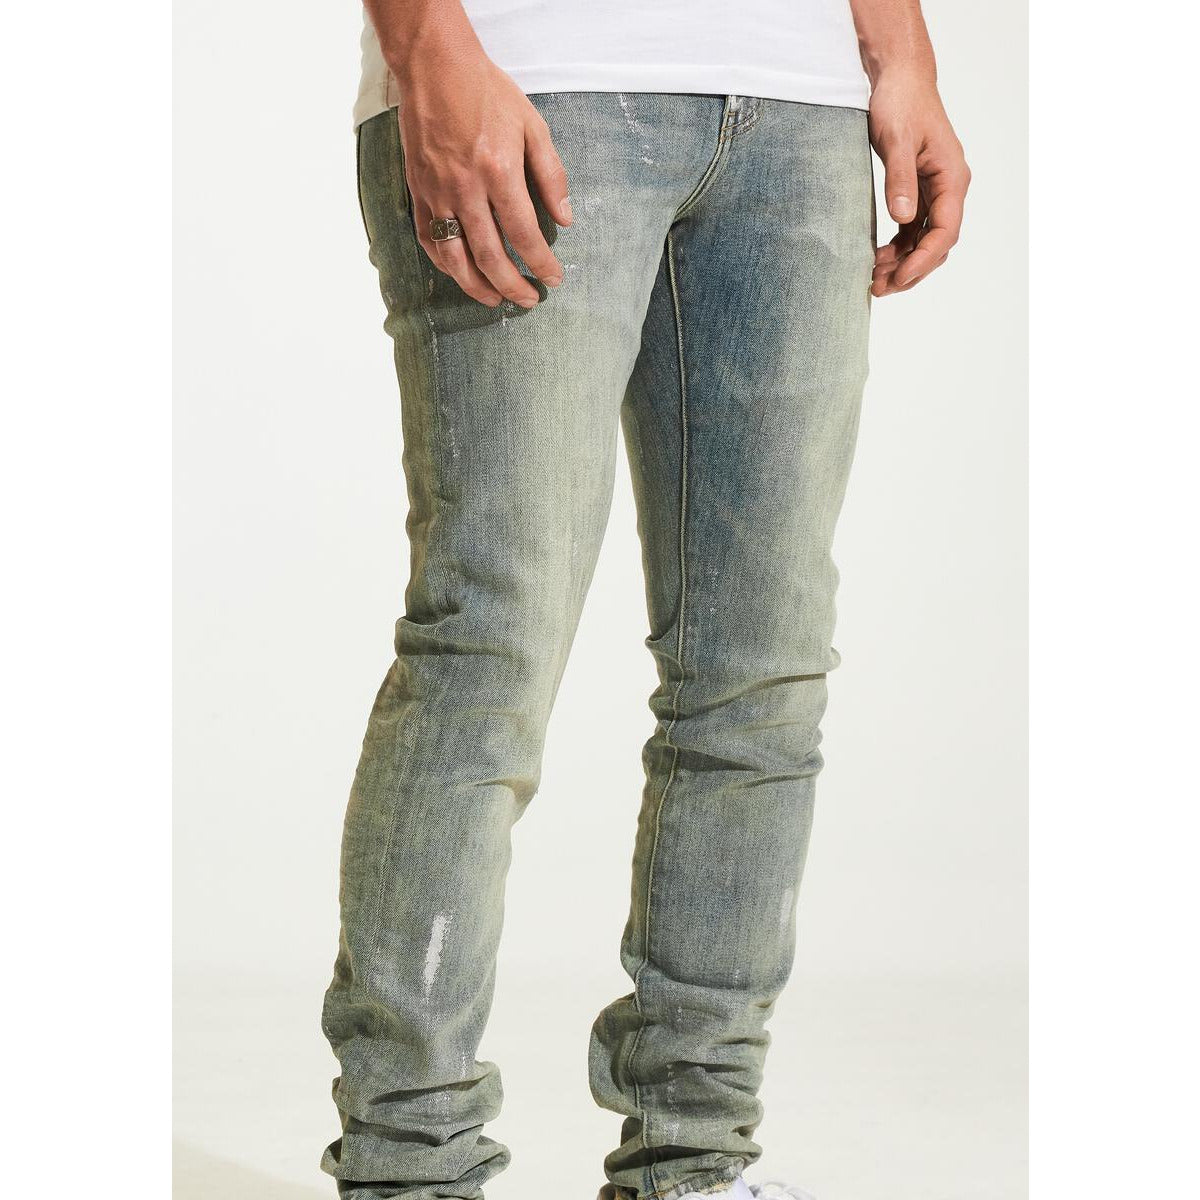 Crysp Denim Atlantic Stone Glitter Jeans (CRYH22-211)